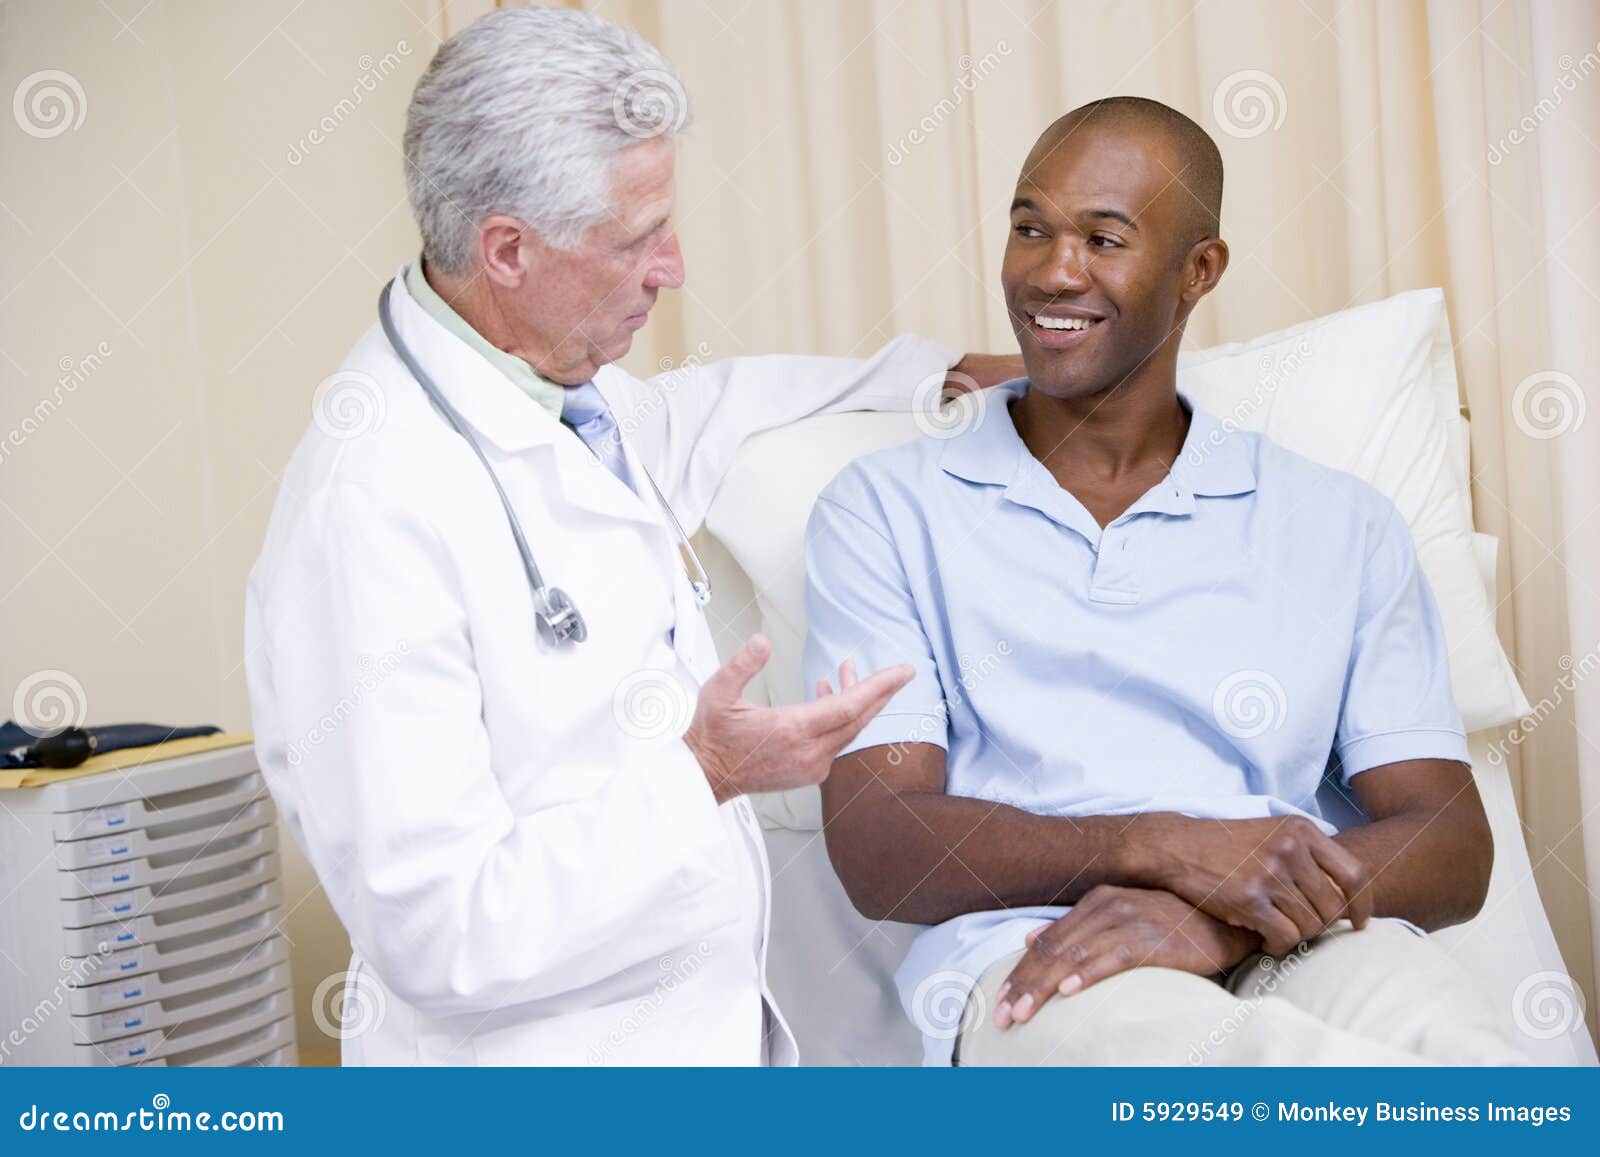 doctor giving smiling man checkup